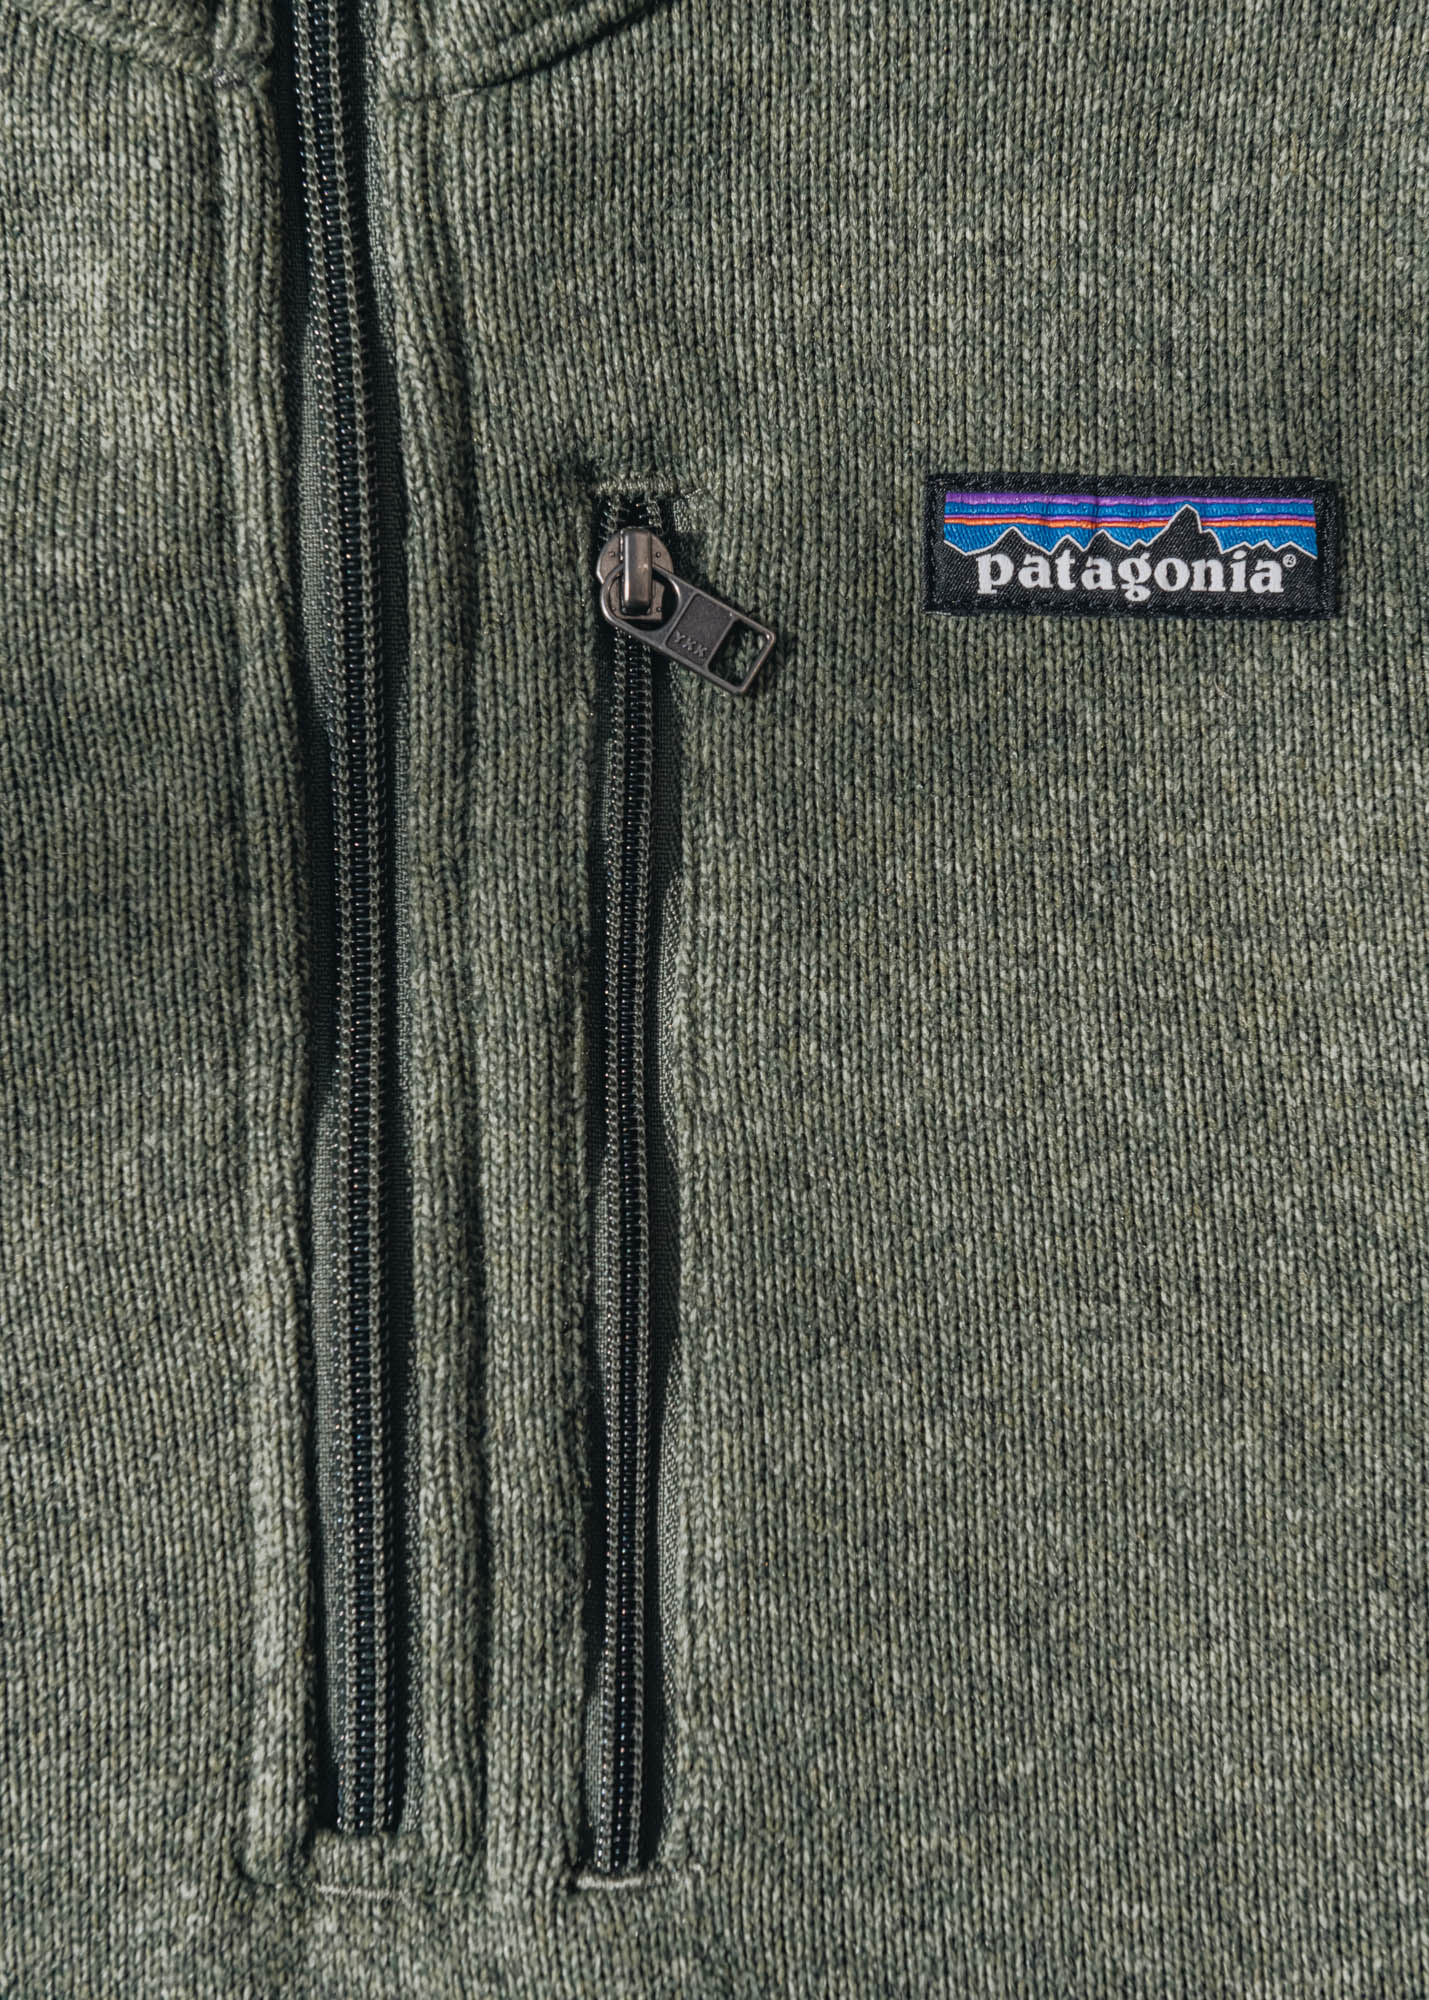 Patagonia Better Sweater Quarter Zip in Industrial Green